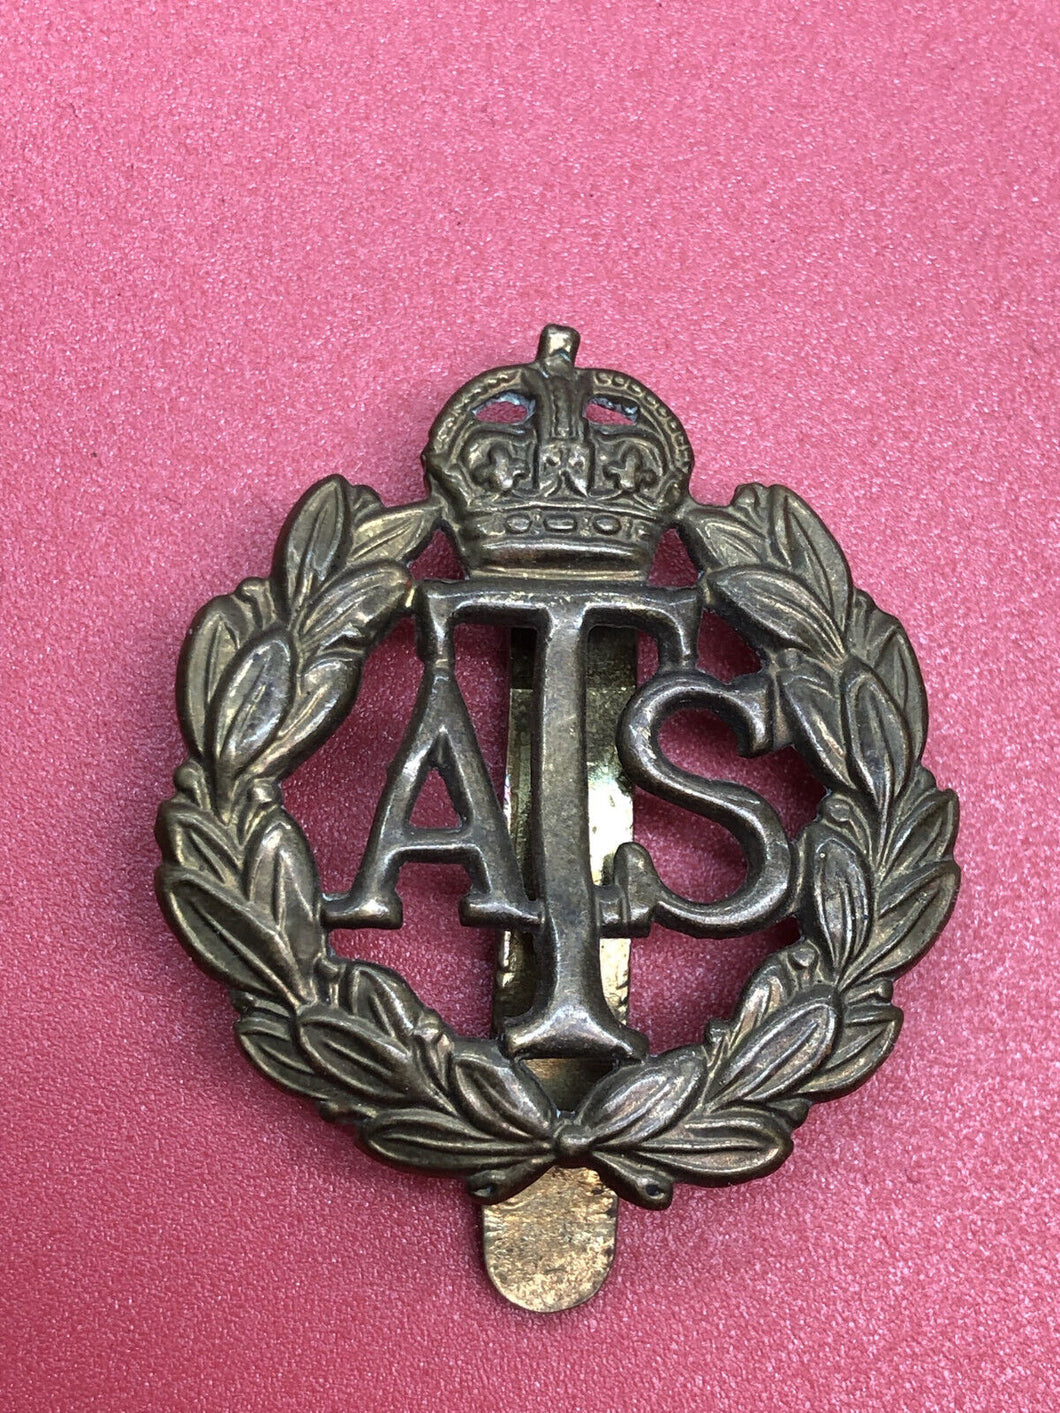 Original WW2 British Army Cap Badge - ATS Auxiliary Territorial Service